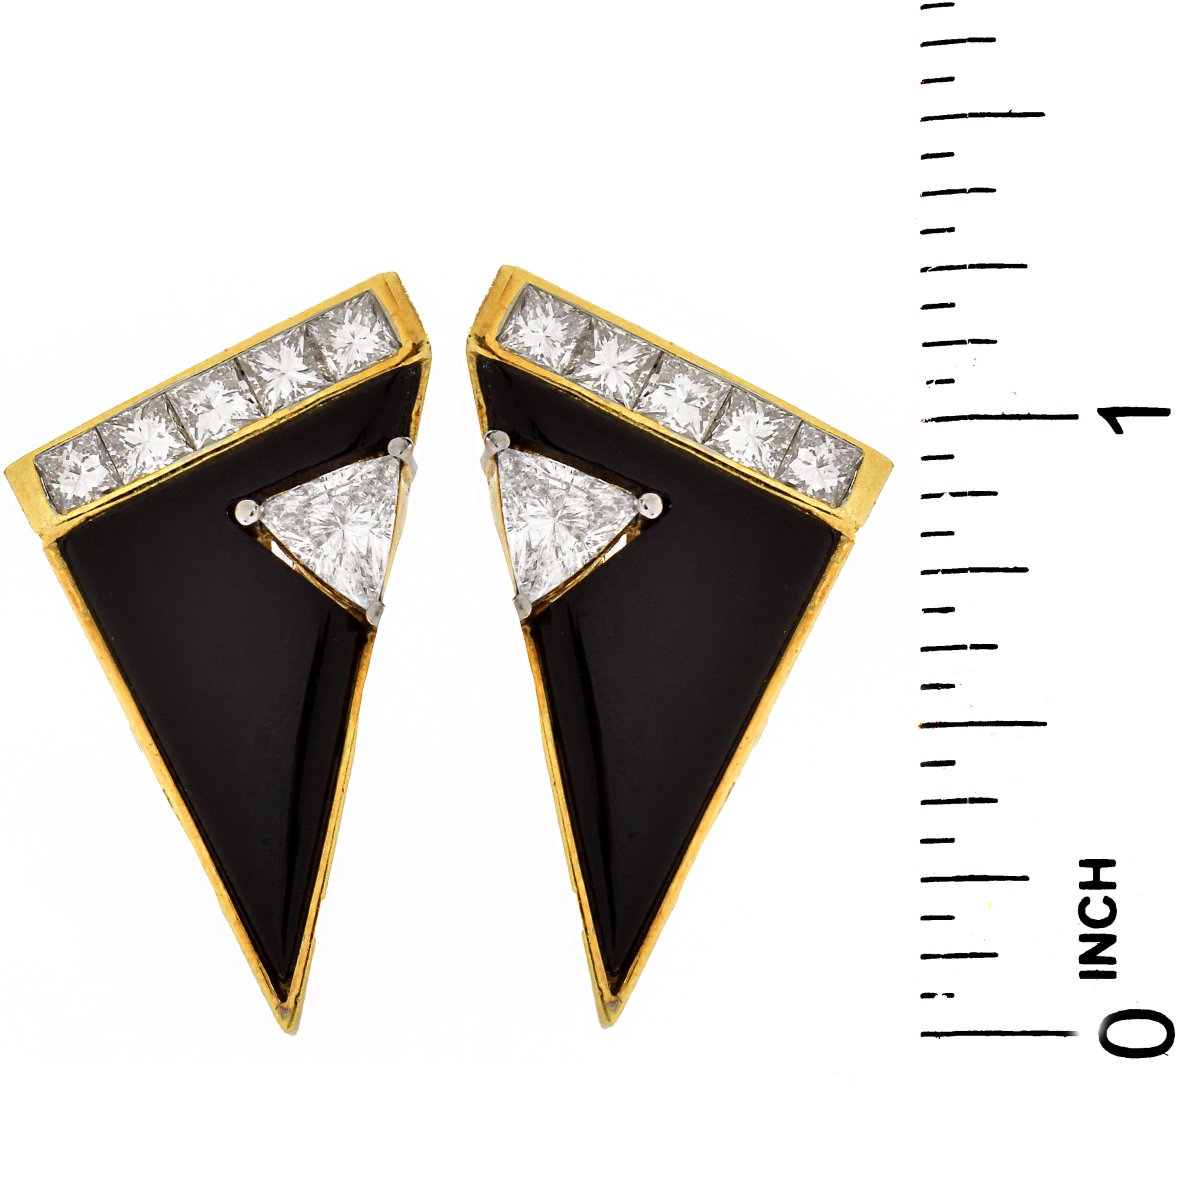 Diamond, Onyx and 18K Gold Earrings